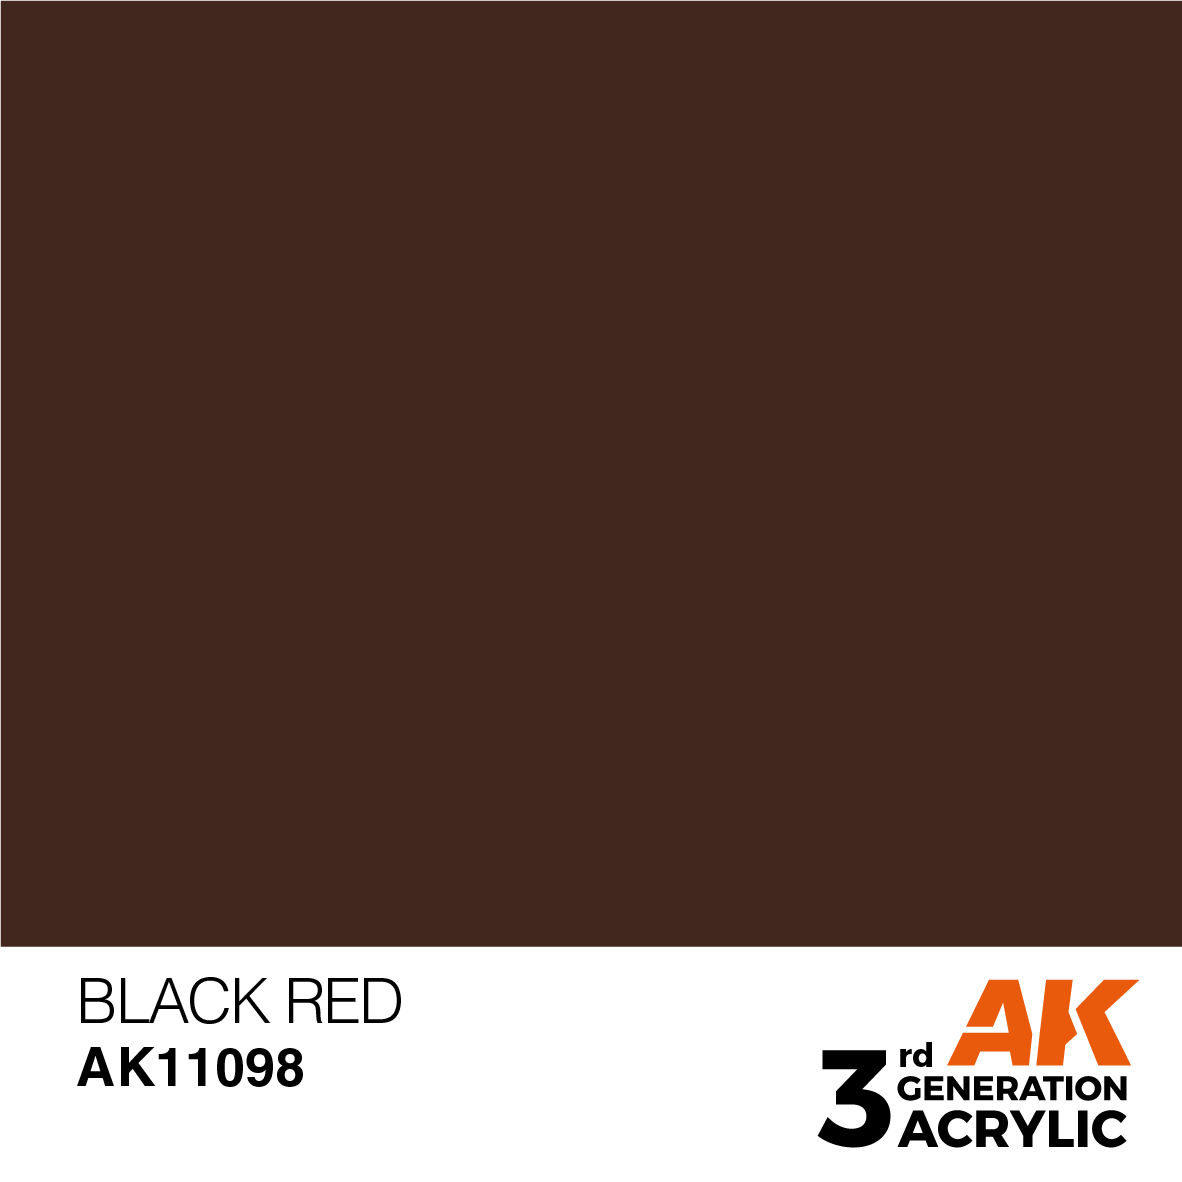 BLACK RED – STANDARD